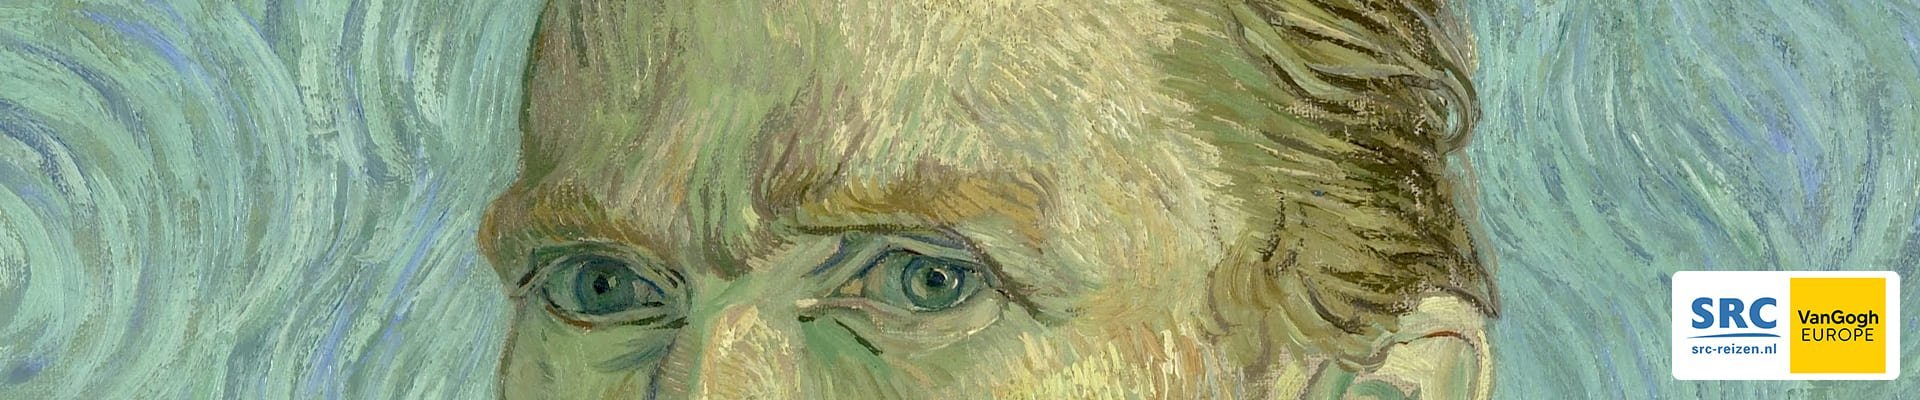 Vincent van Gogh, Zelfportret, 1889